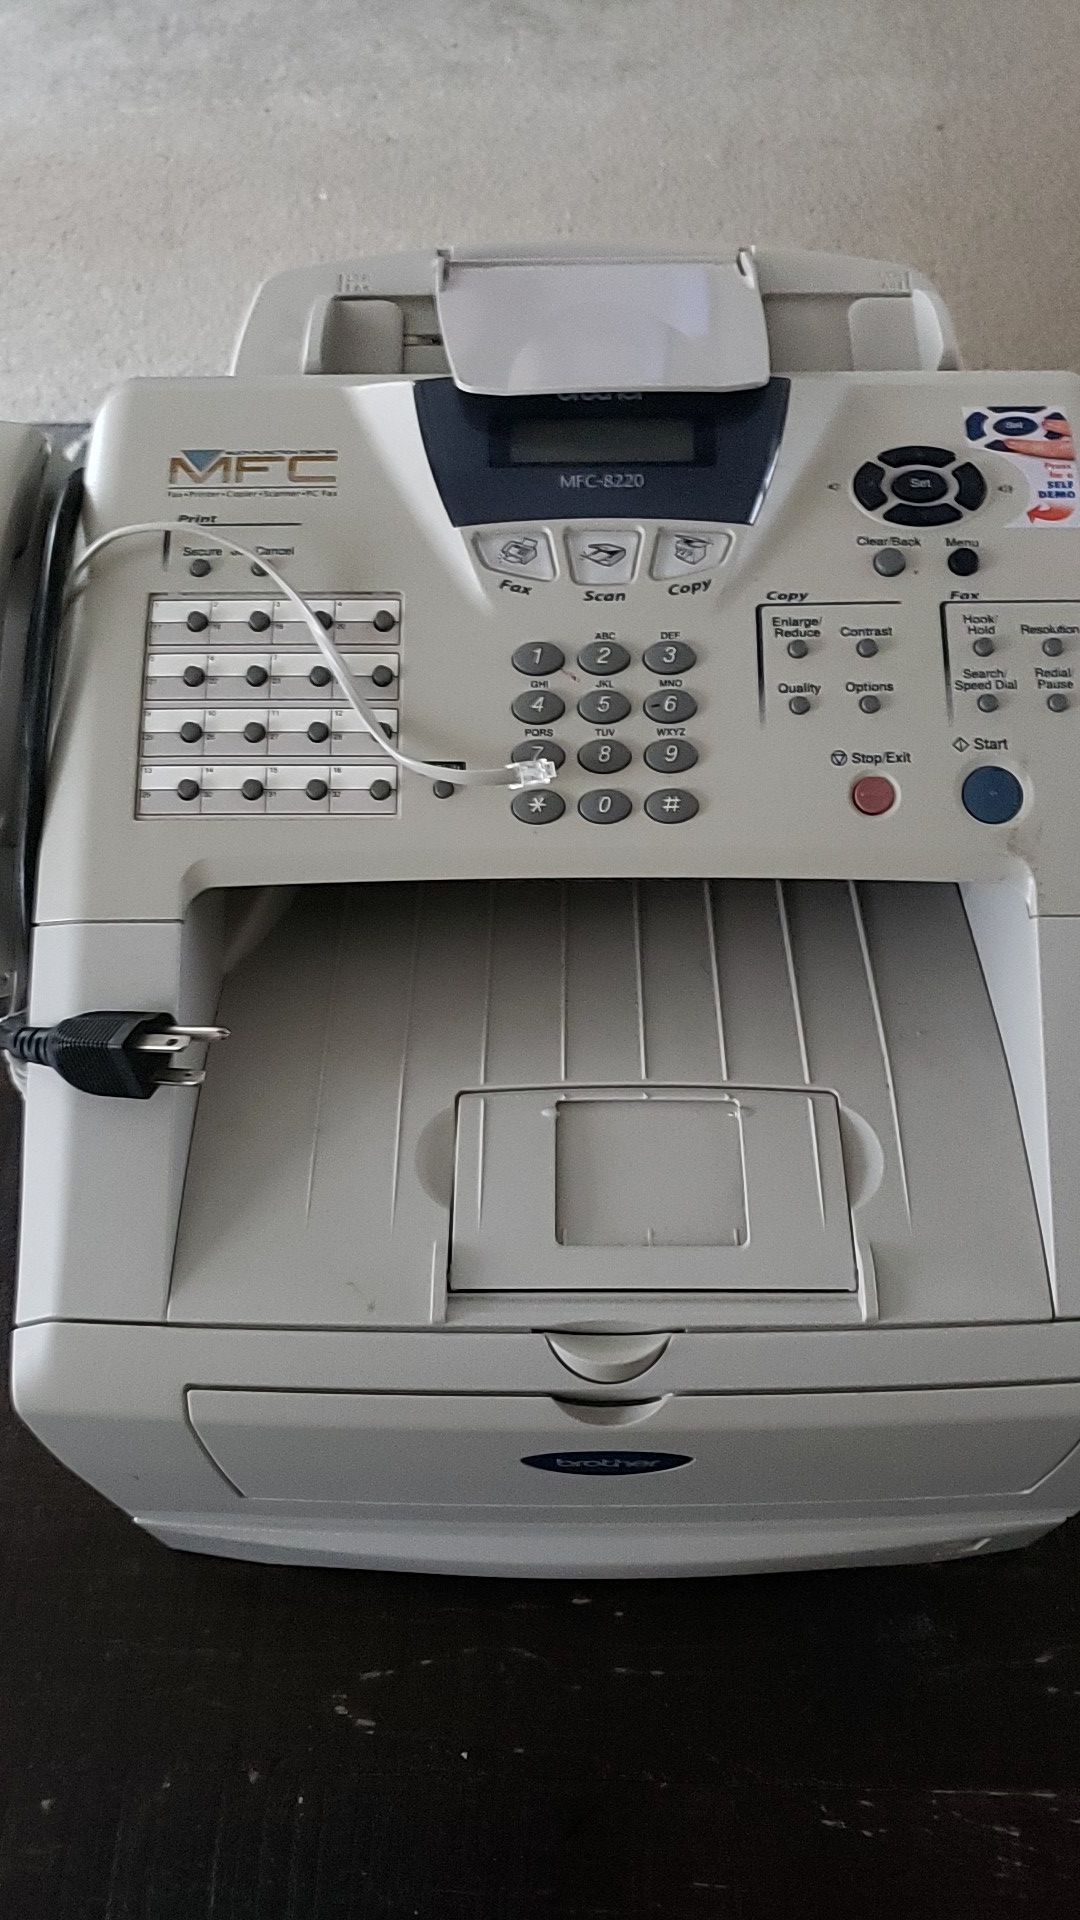 Brother MFC 8220 Fax, printer copier scanner